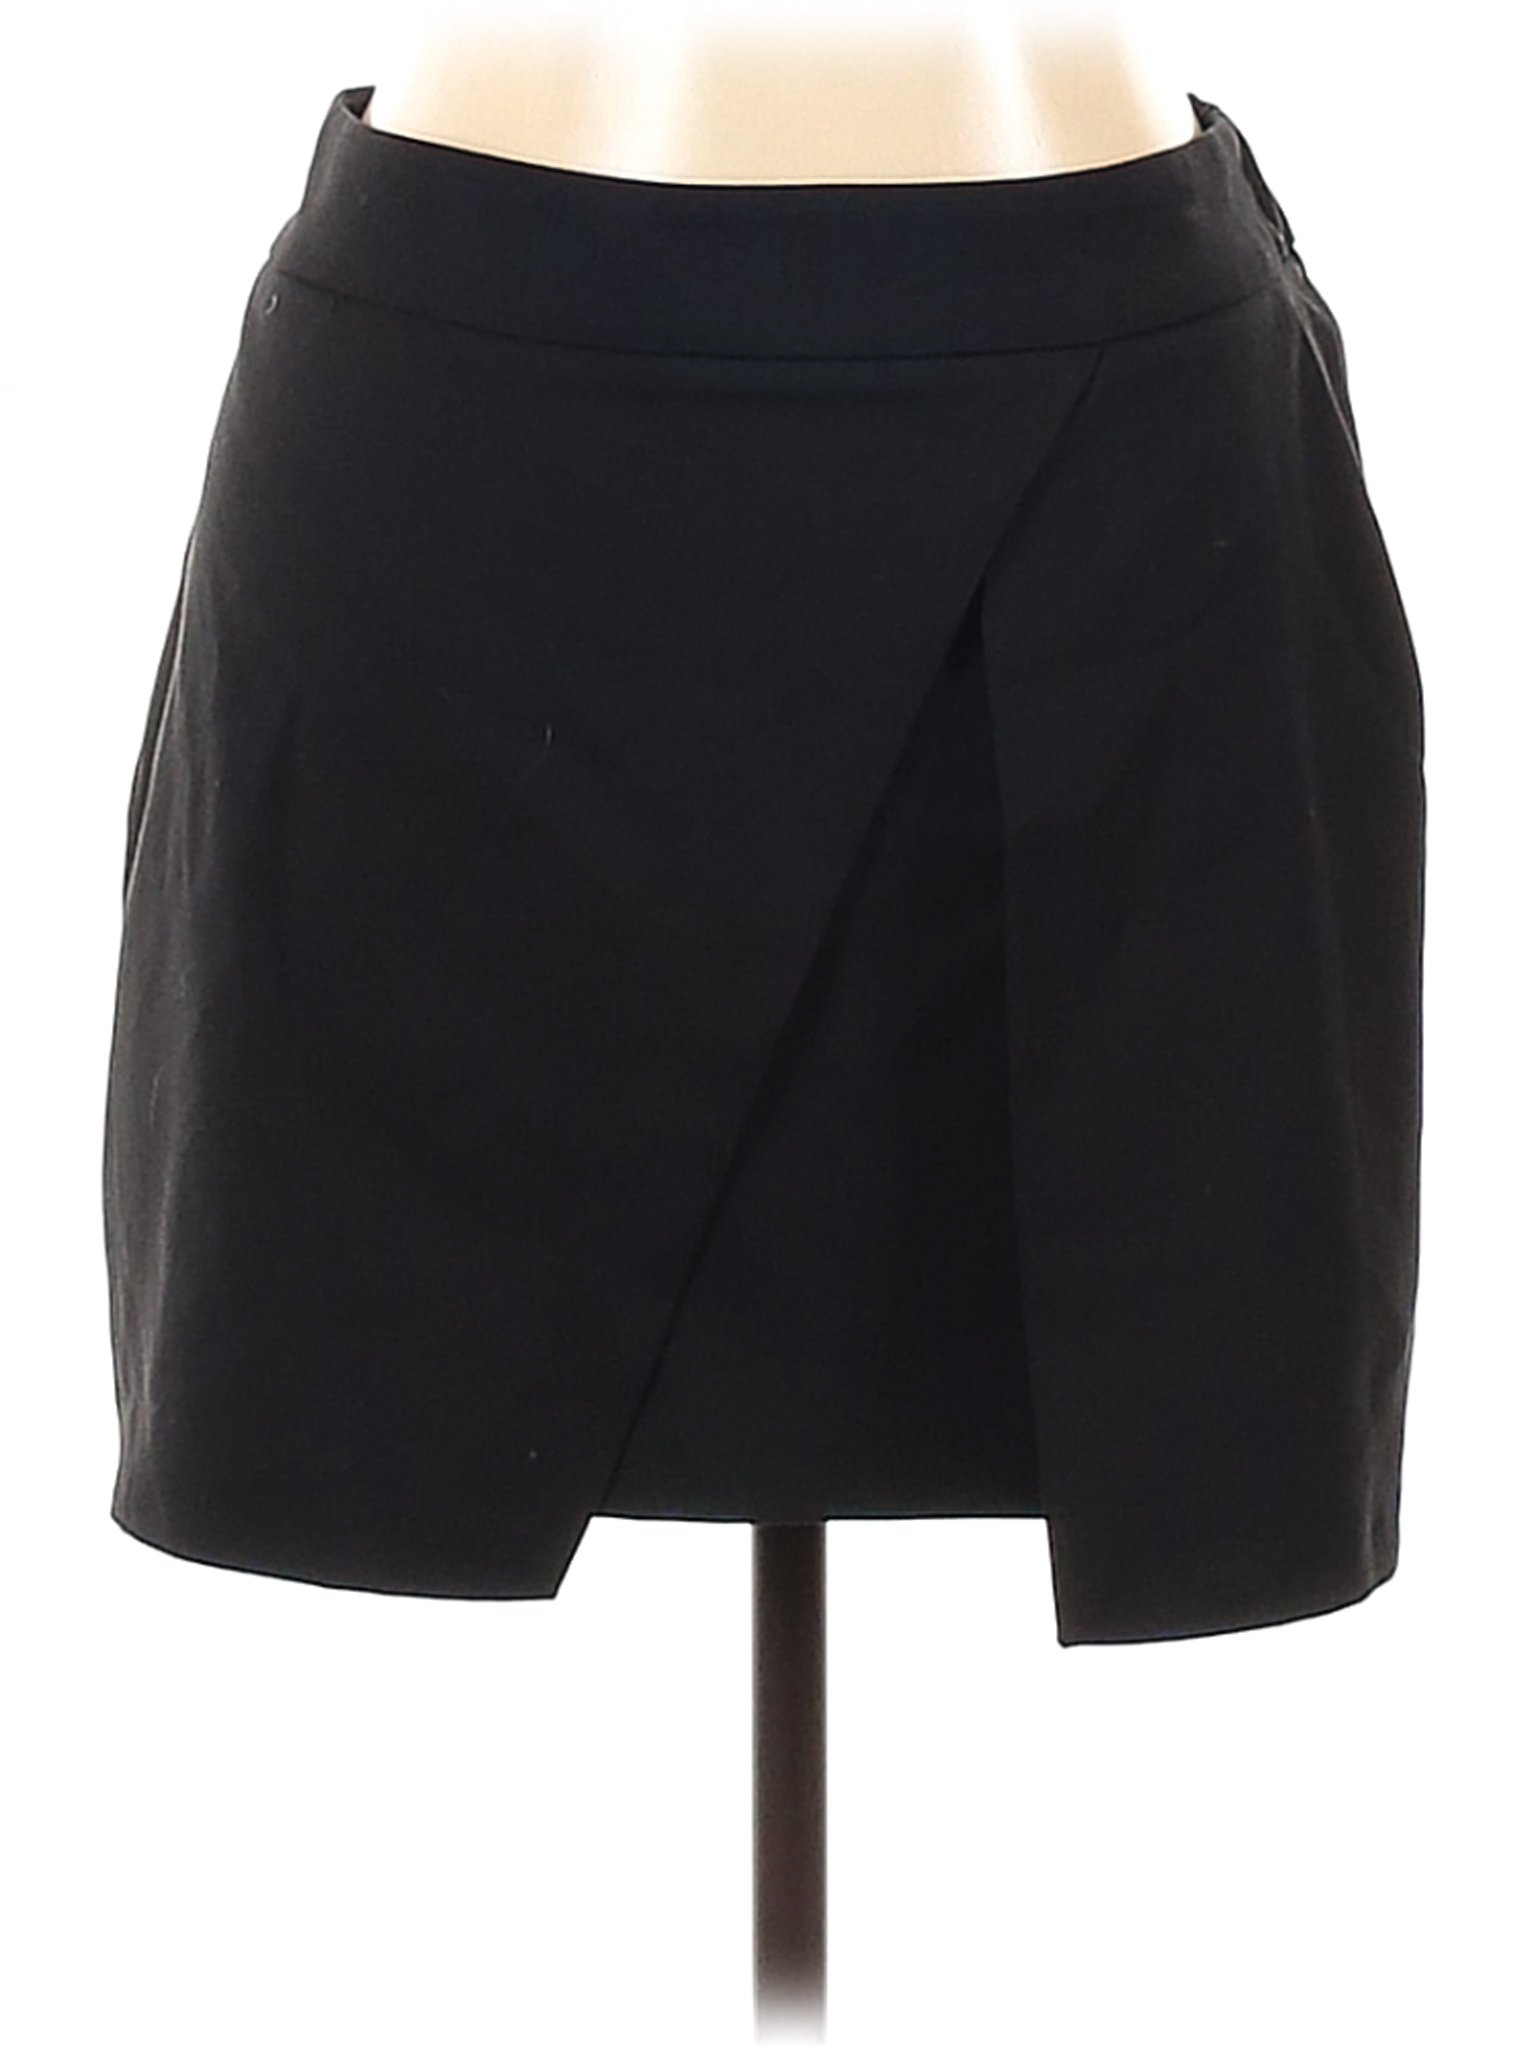 Bershka Solid Black Casual Skirt Size L - 66% off | thredUP